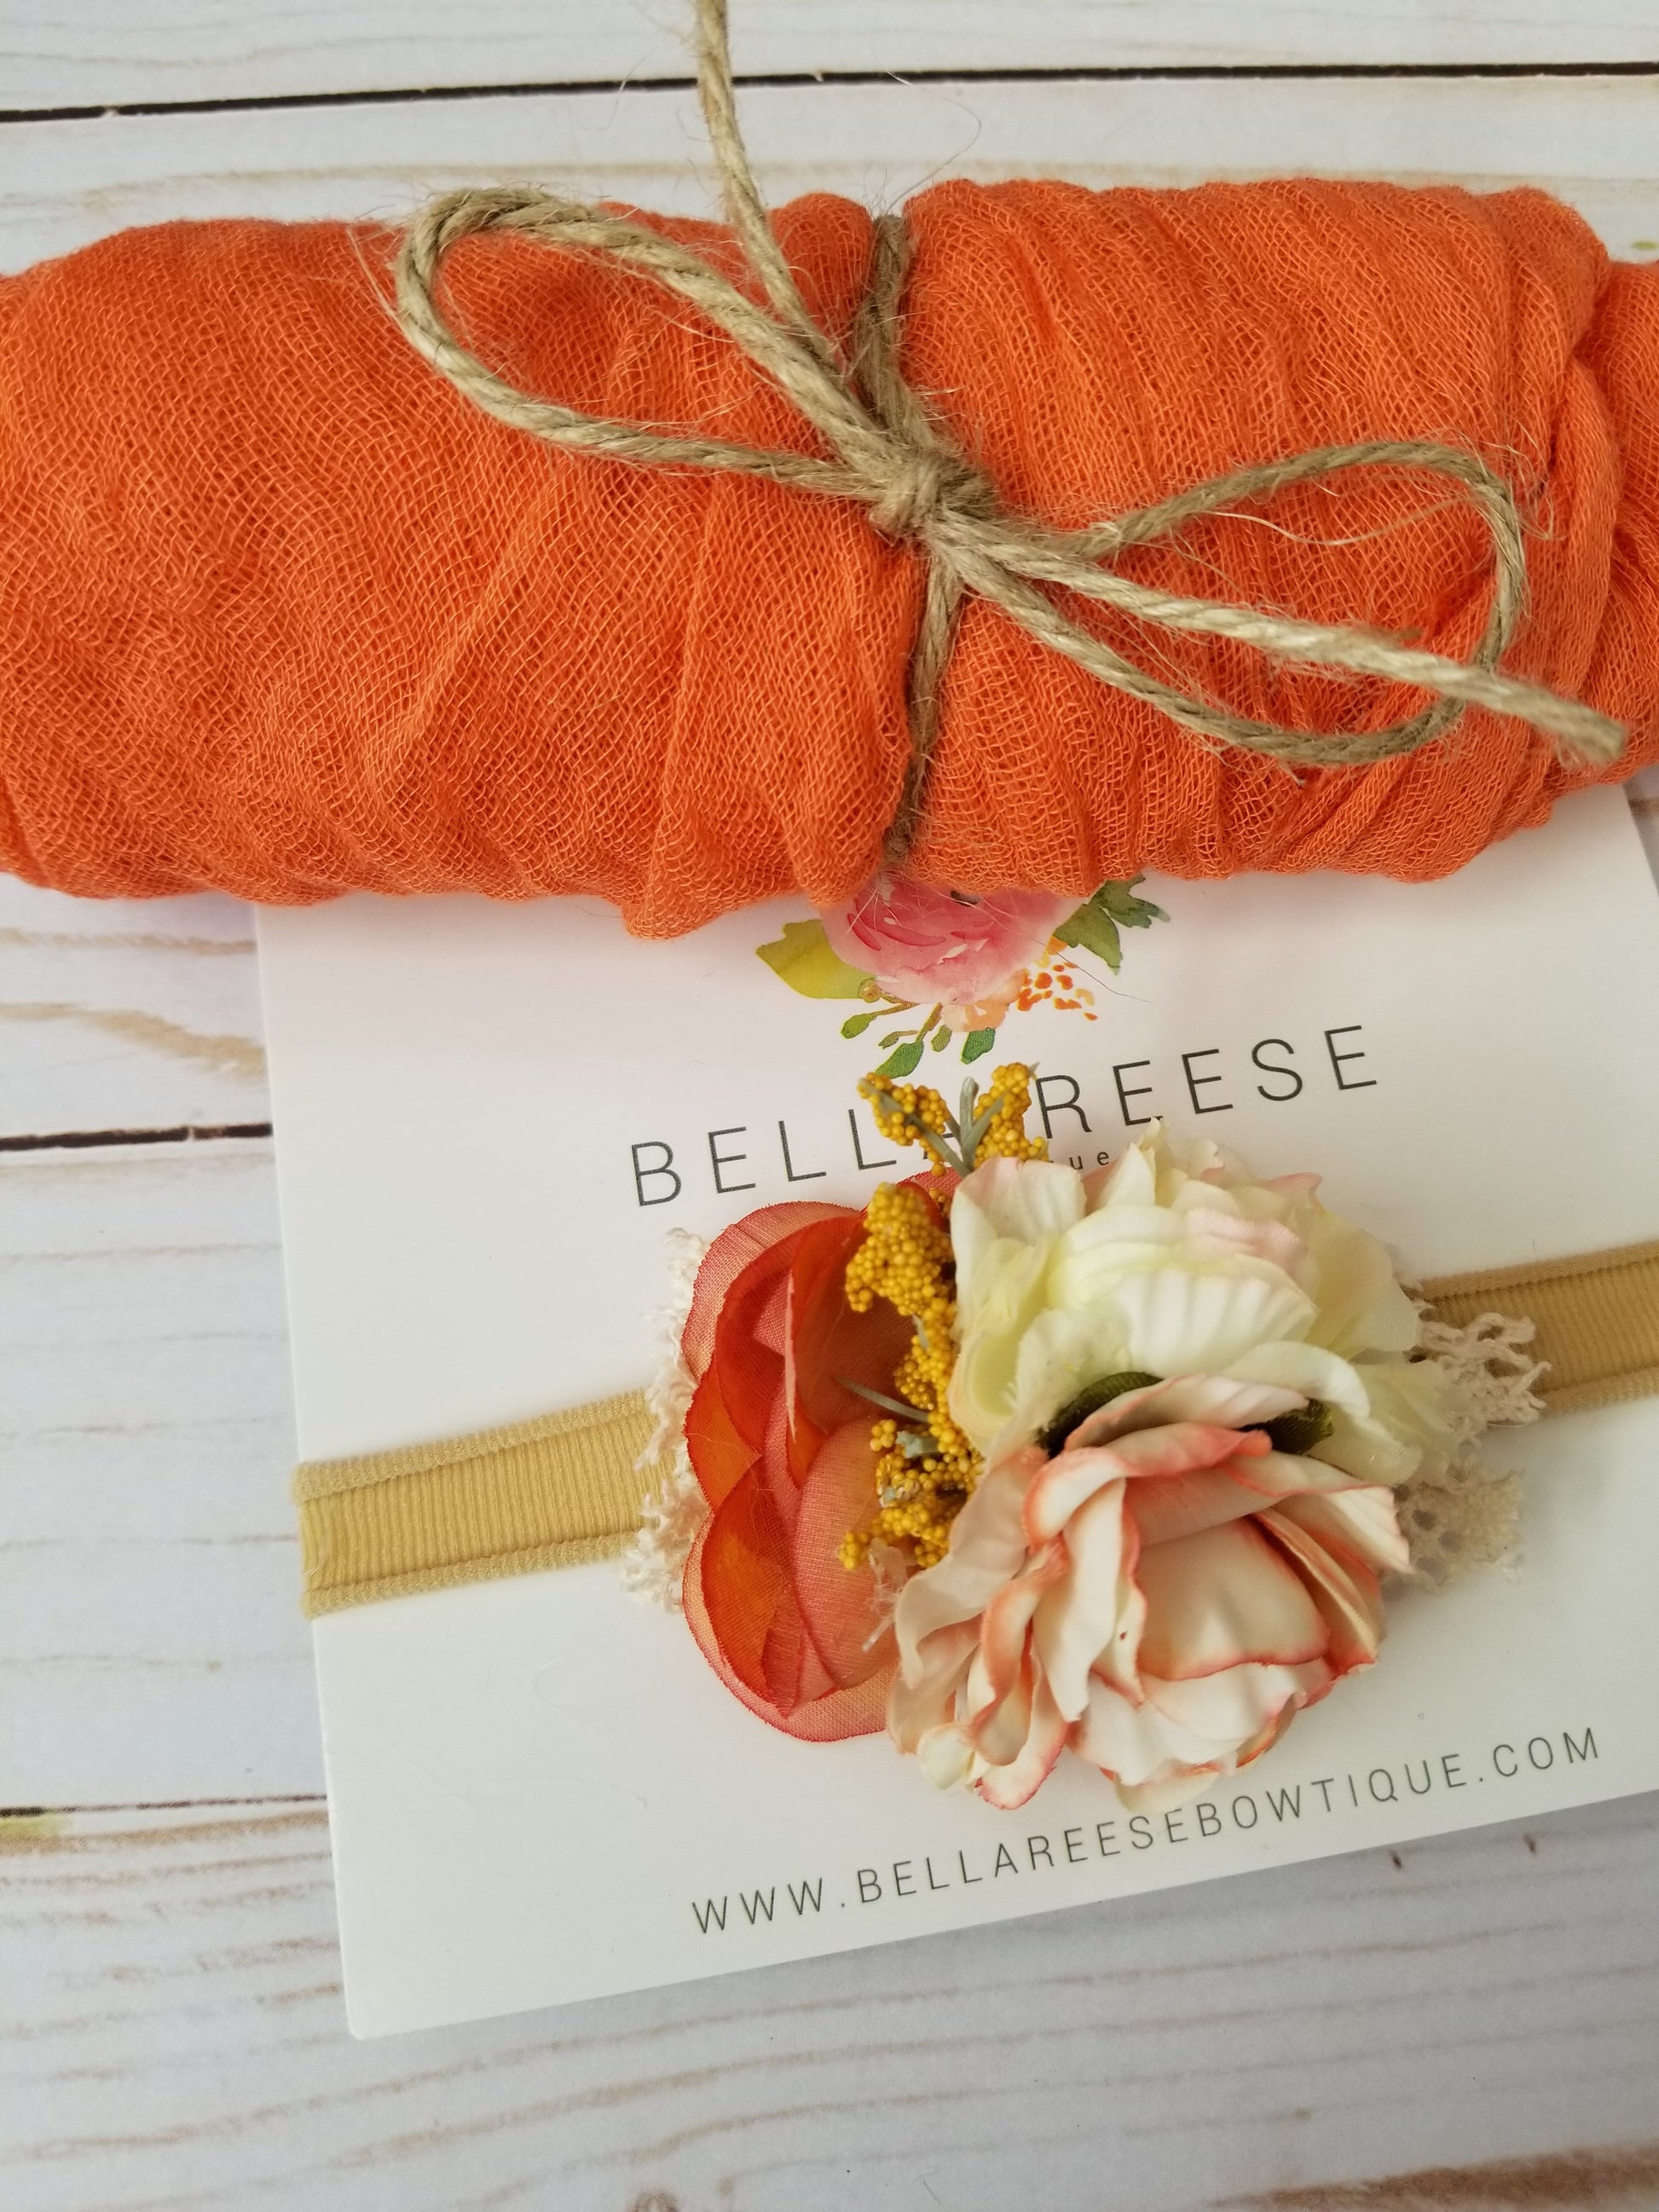 Bella Reese Bowtique Peach Melba Wrap Set